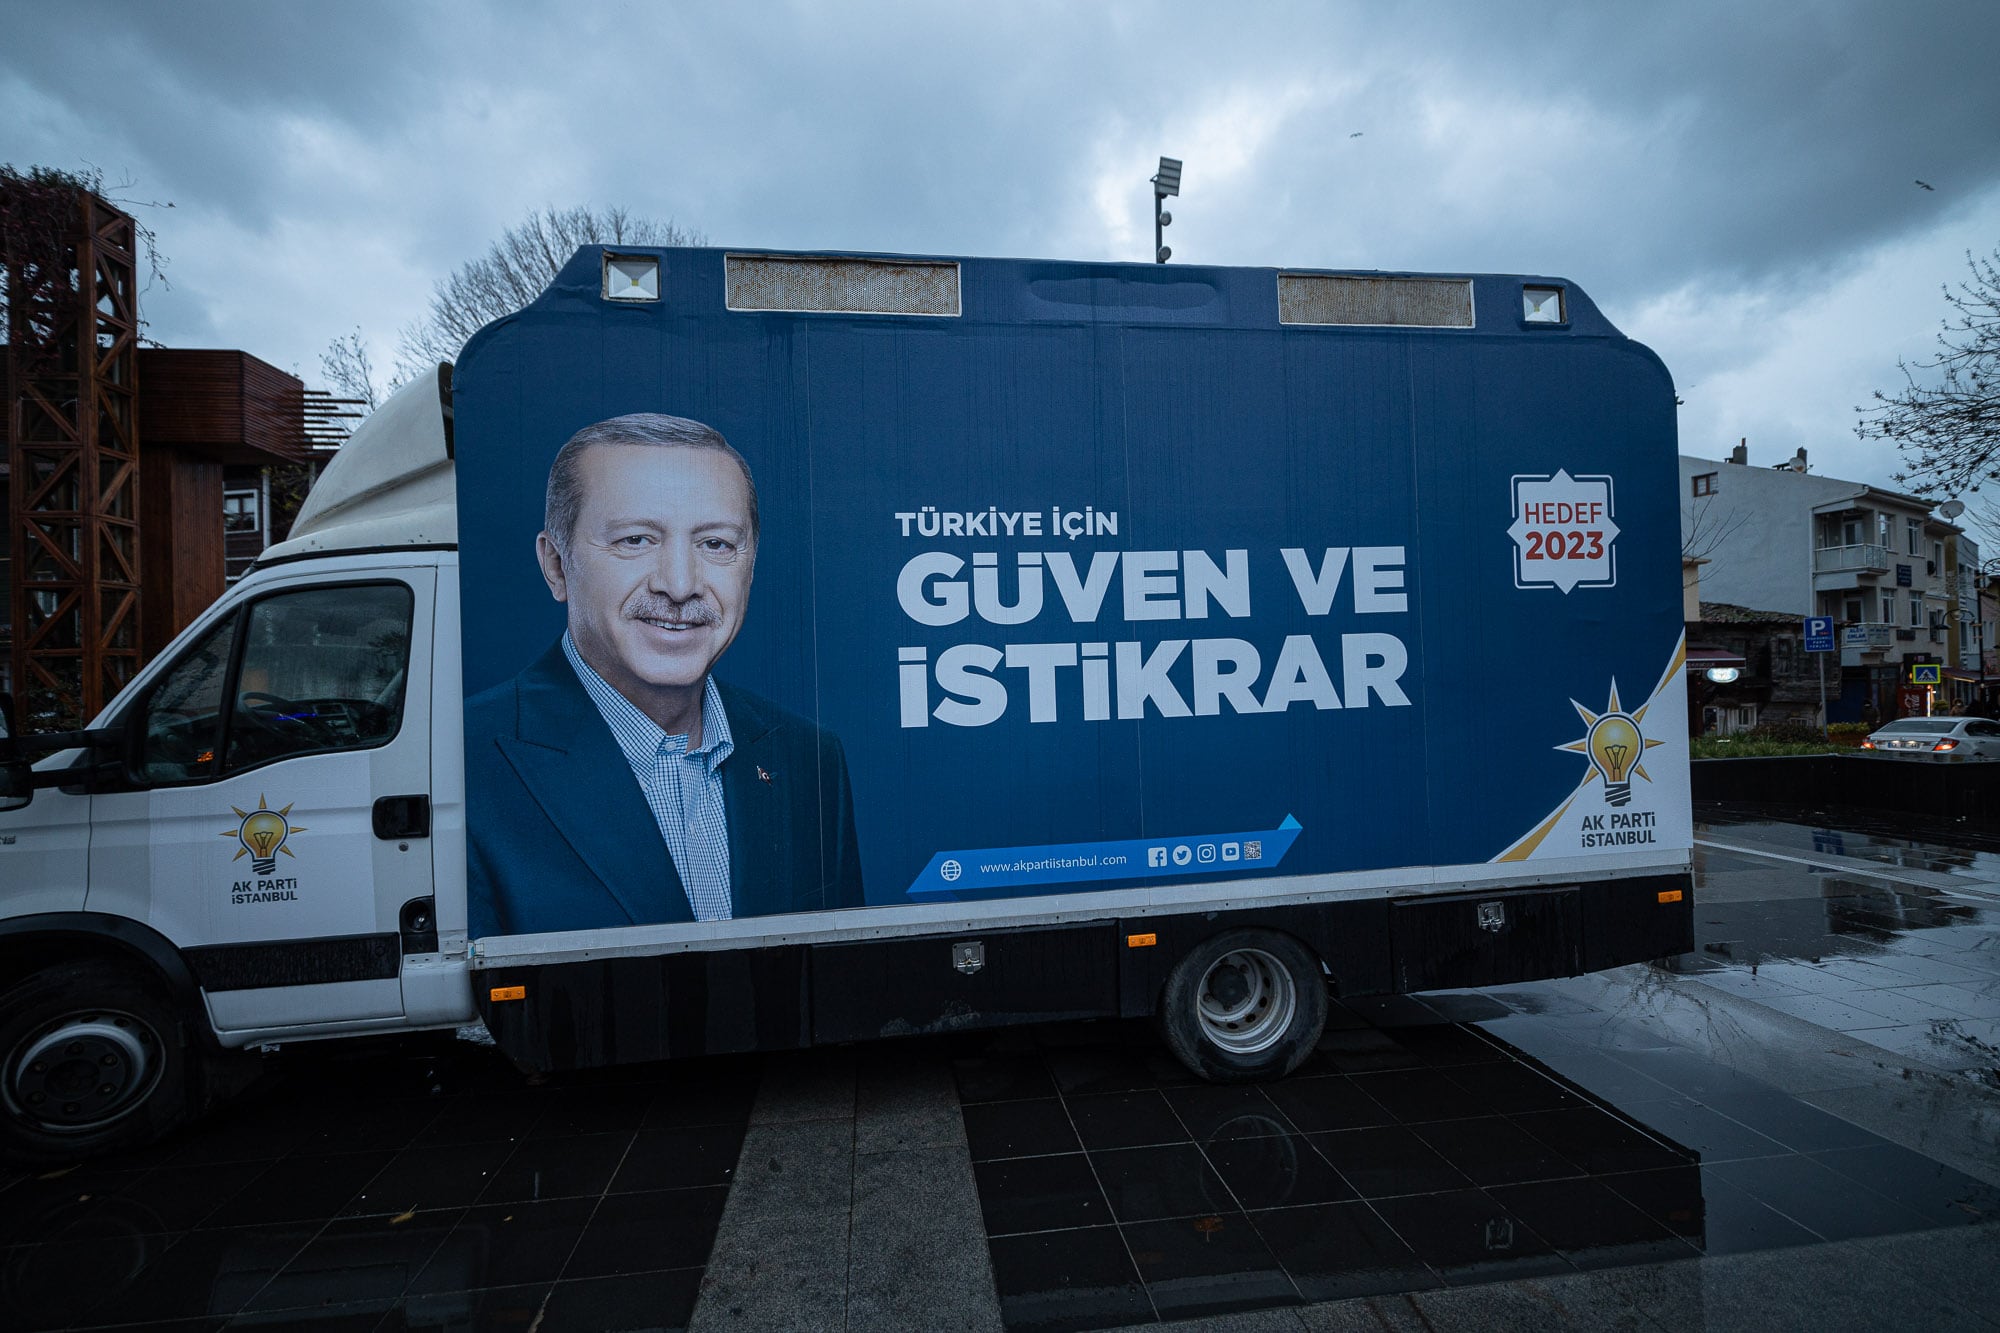 pro-Erdogan propaganda truck: "Trust and Stability"